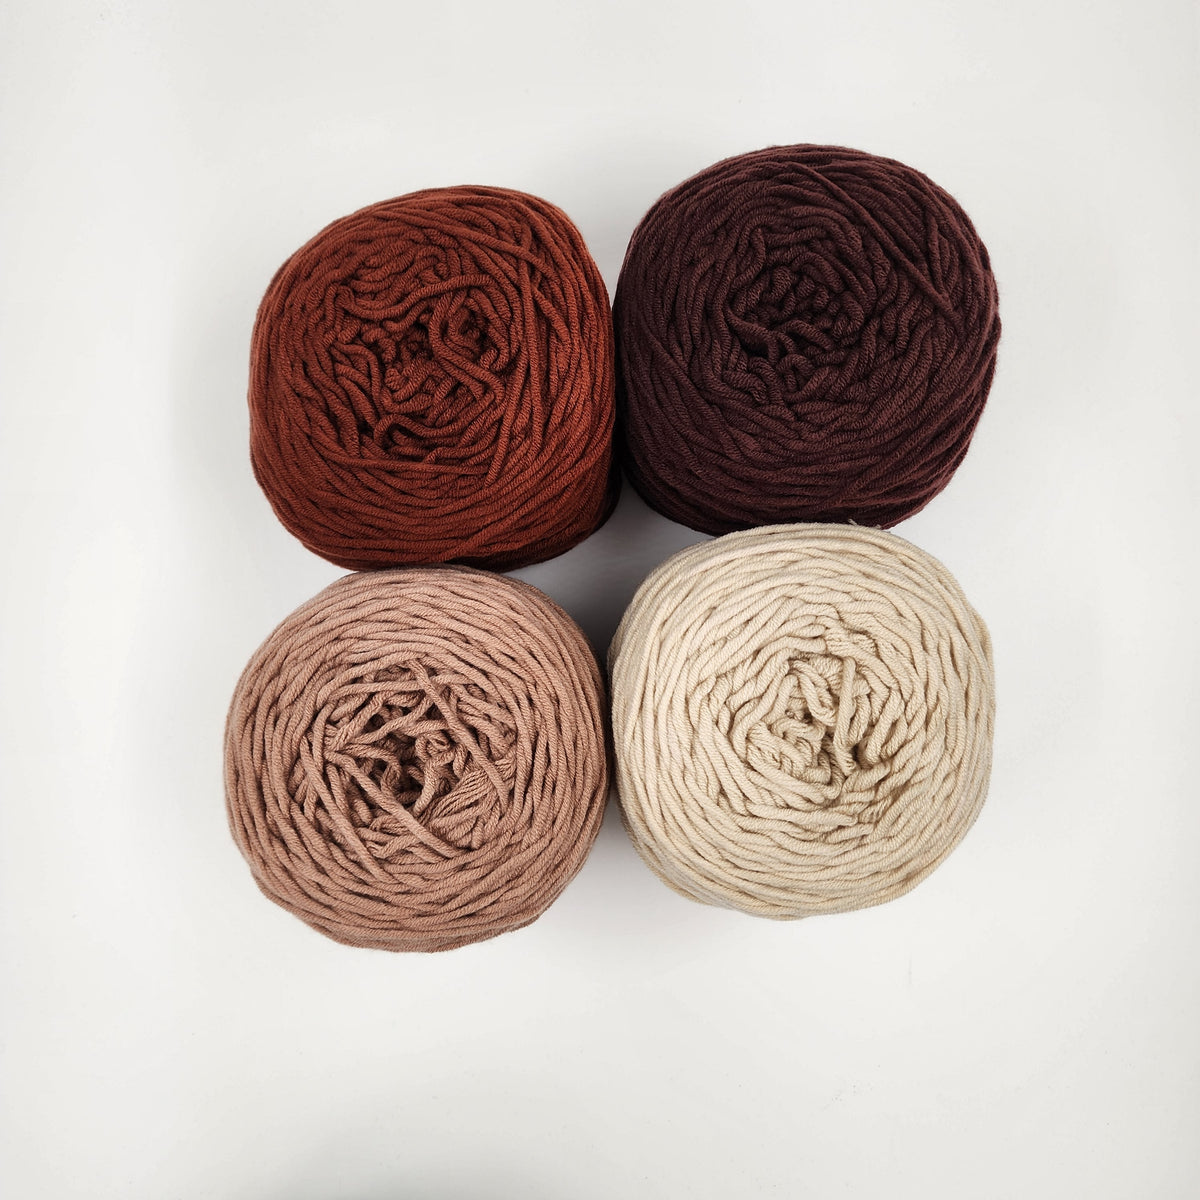 EFFY Chunky Cotton Acrylic Yarn Bundles! Inspiration awaits!